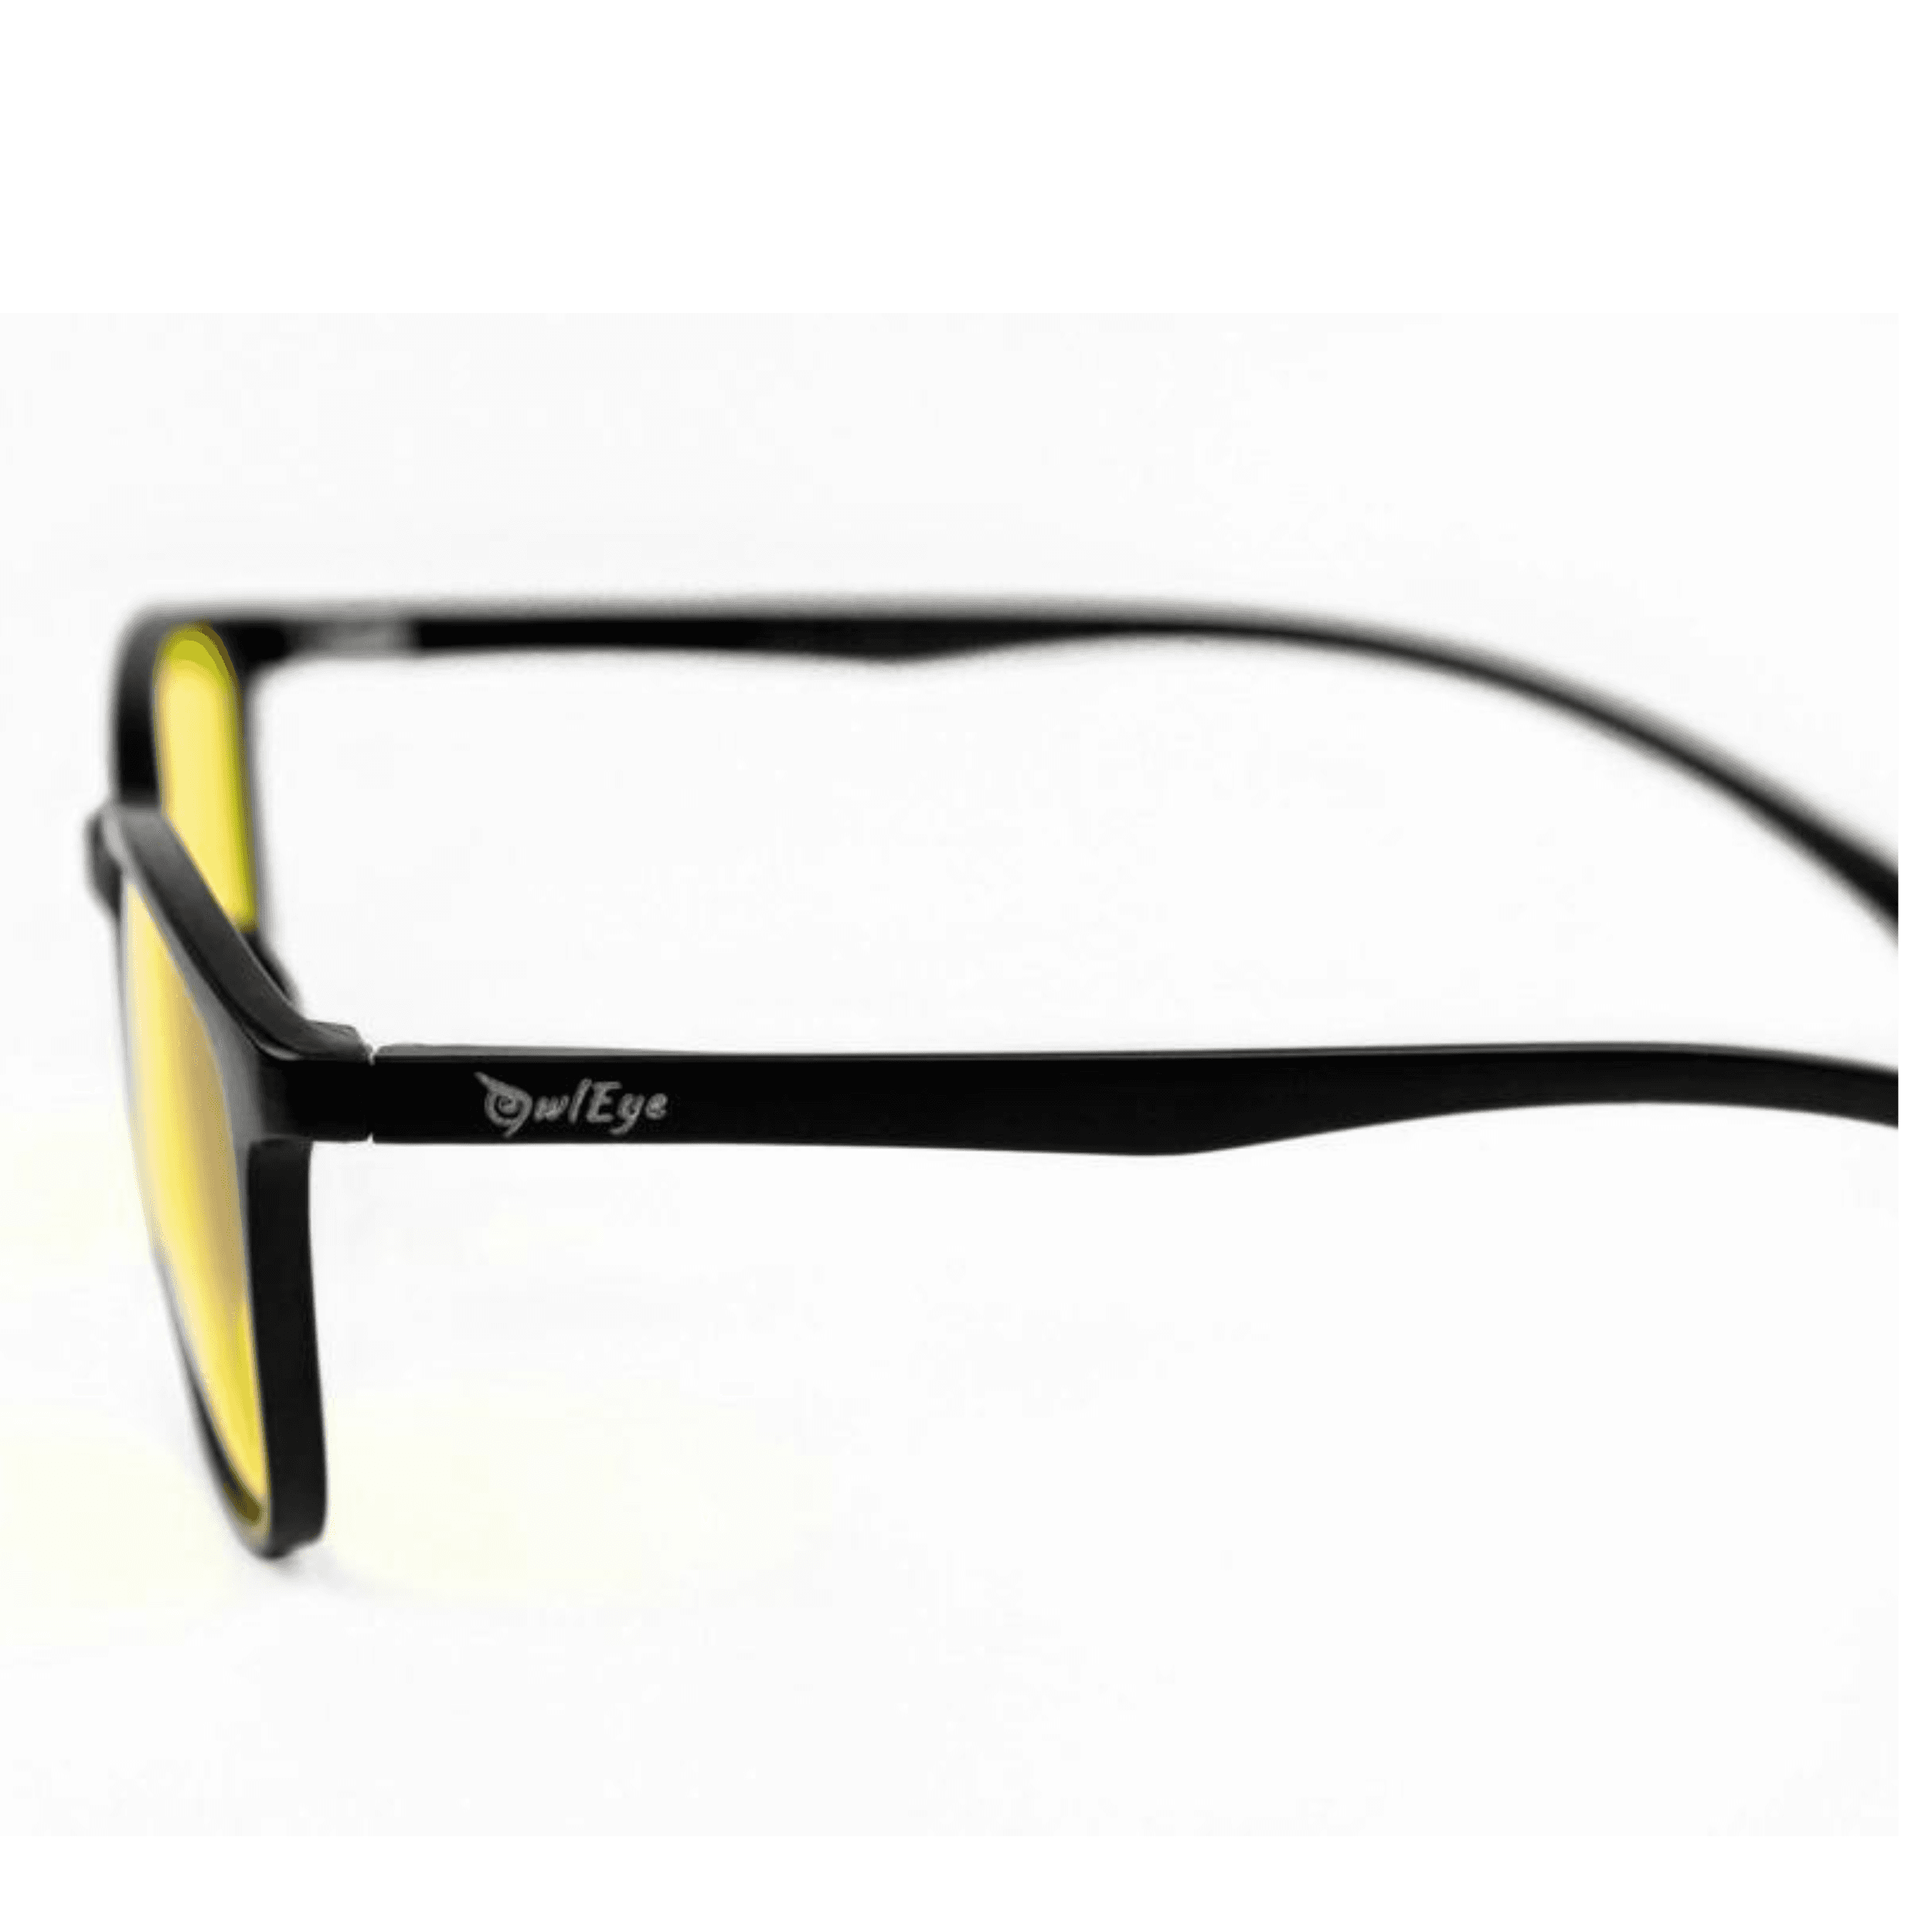 Blue Light Filtering Glasses OWLEYE model: Dawn III - 47% Protection